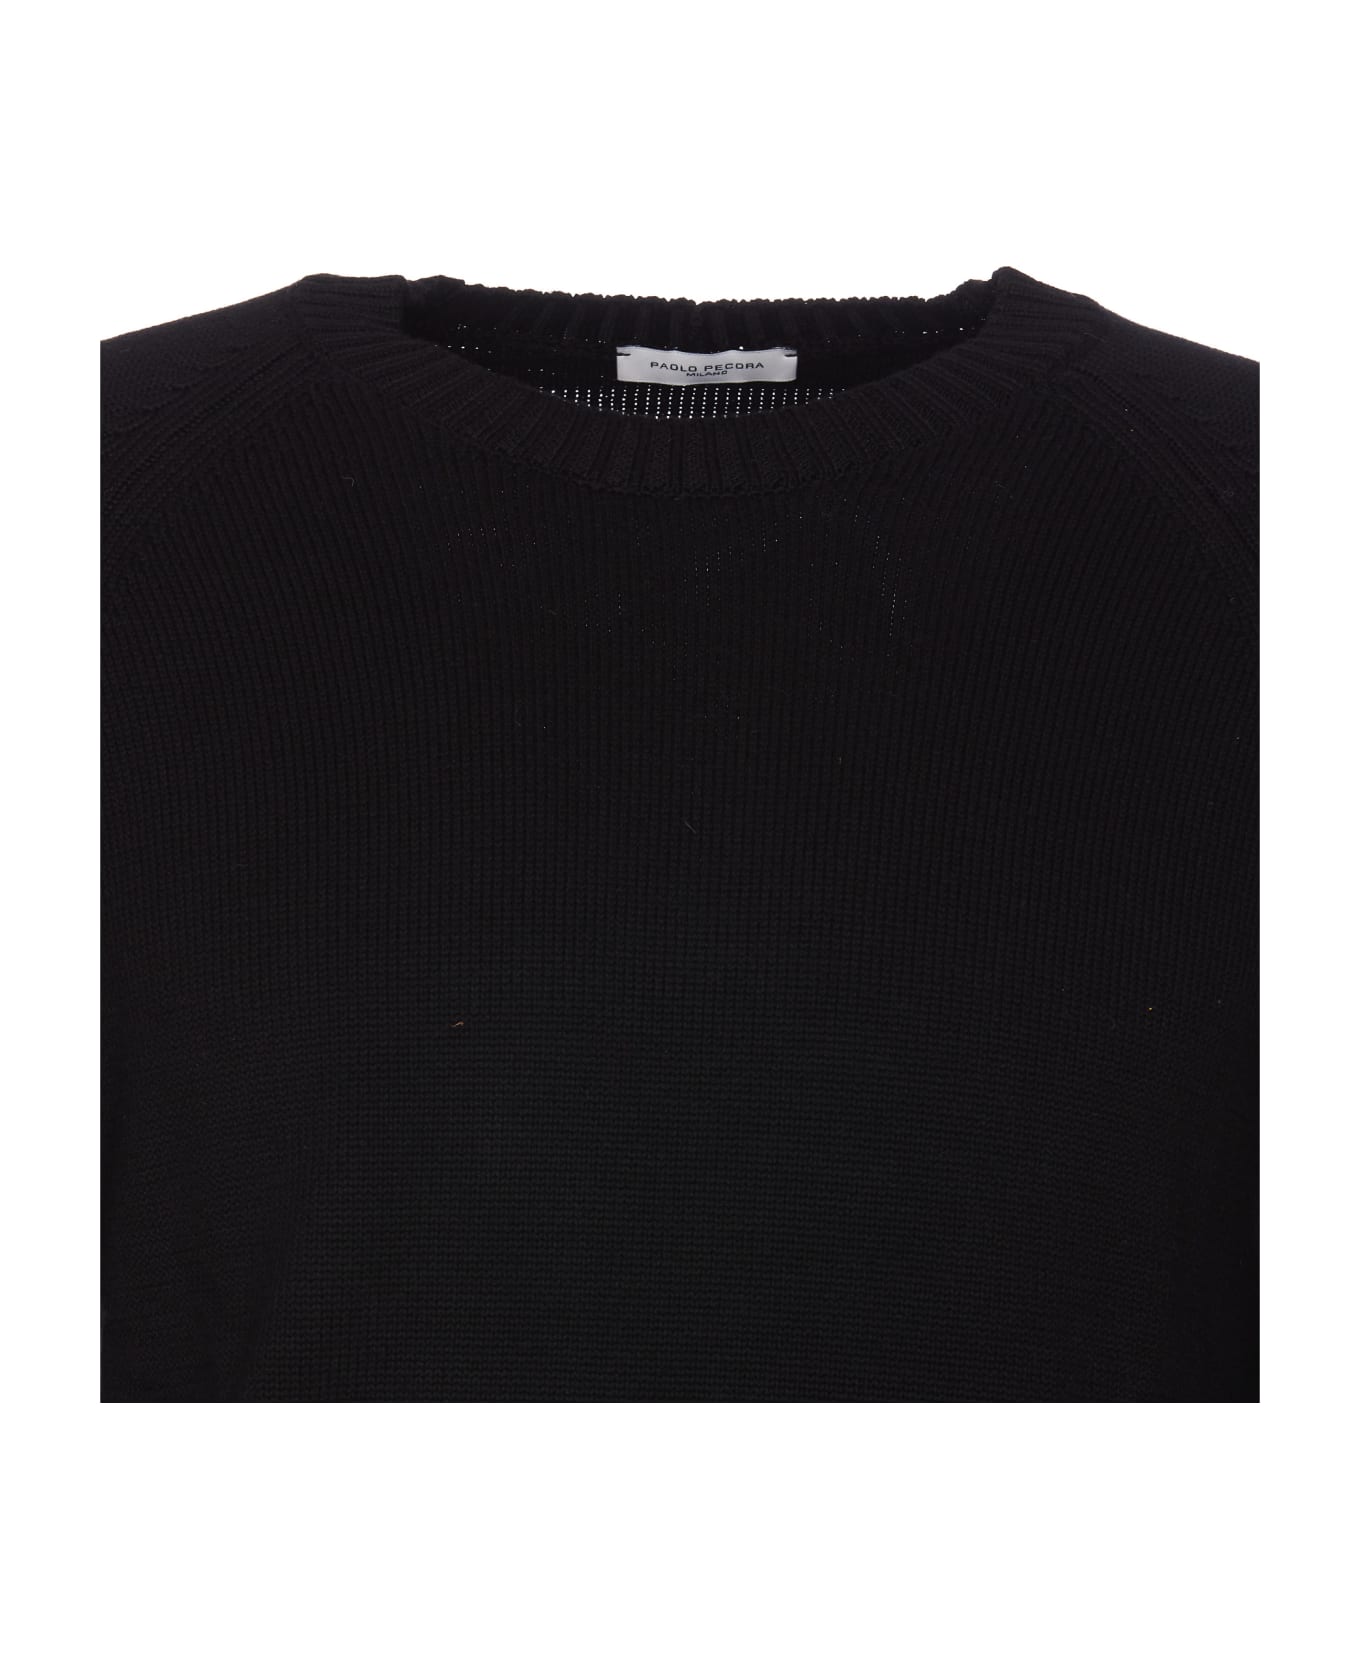 Paolo Pecora Sweater - Black